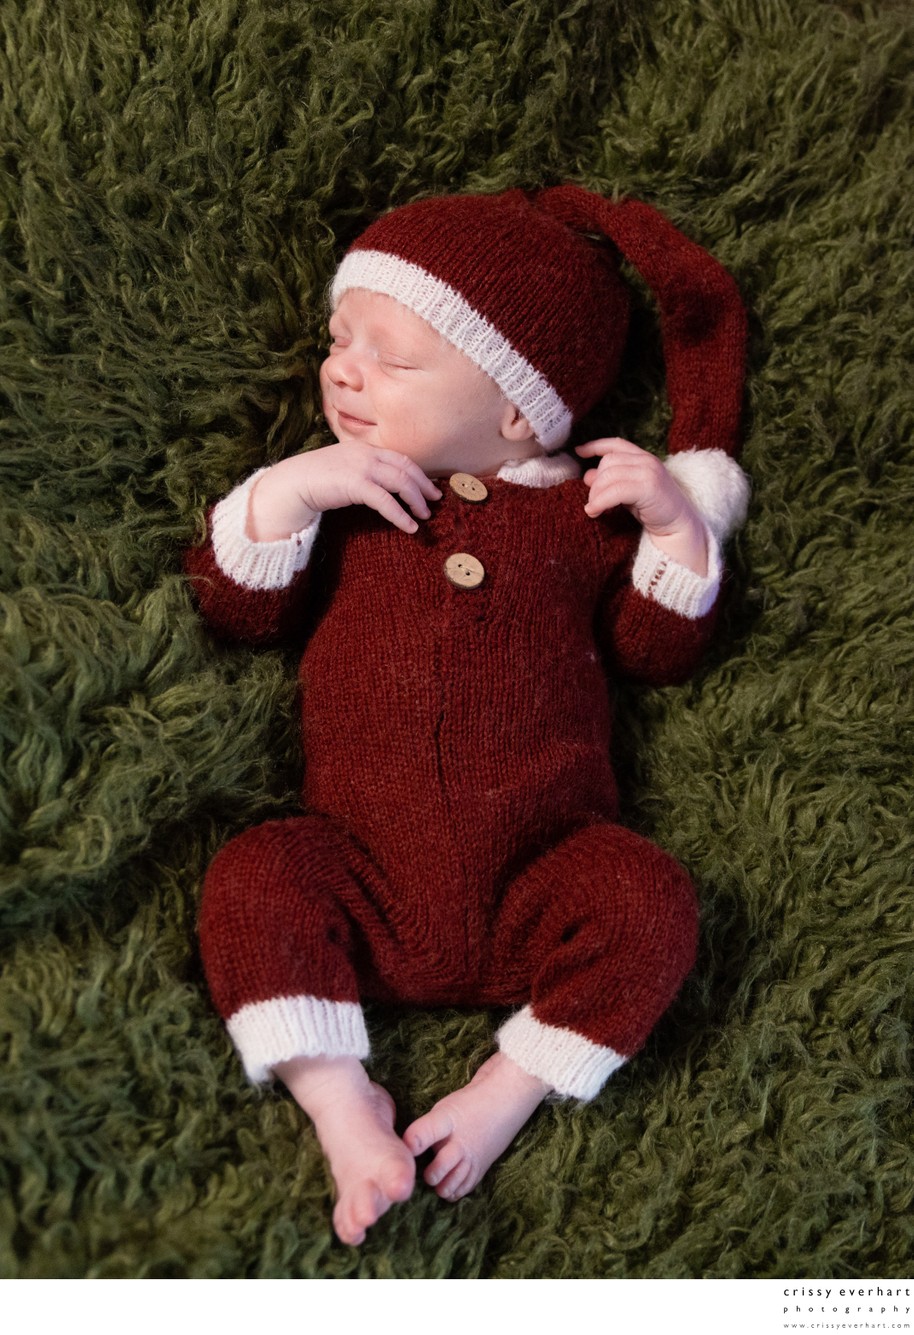 Newborn Christmas Photos in Santa Outfit